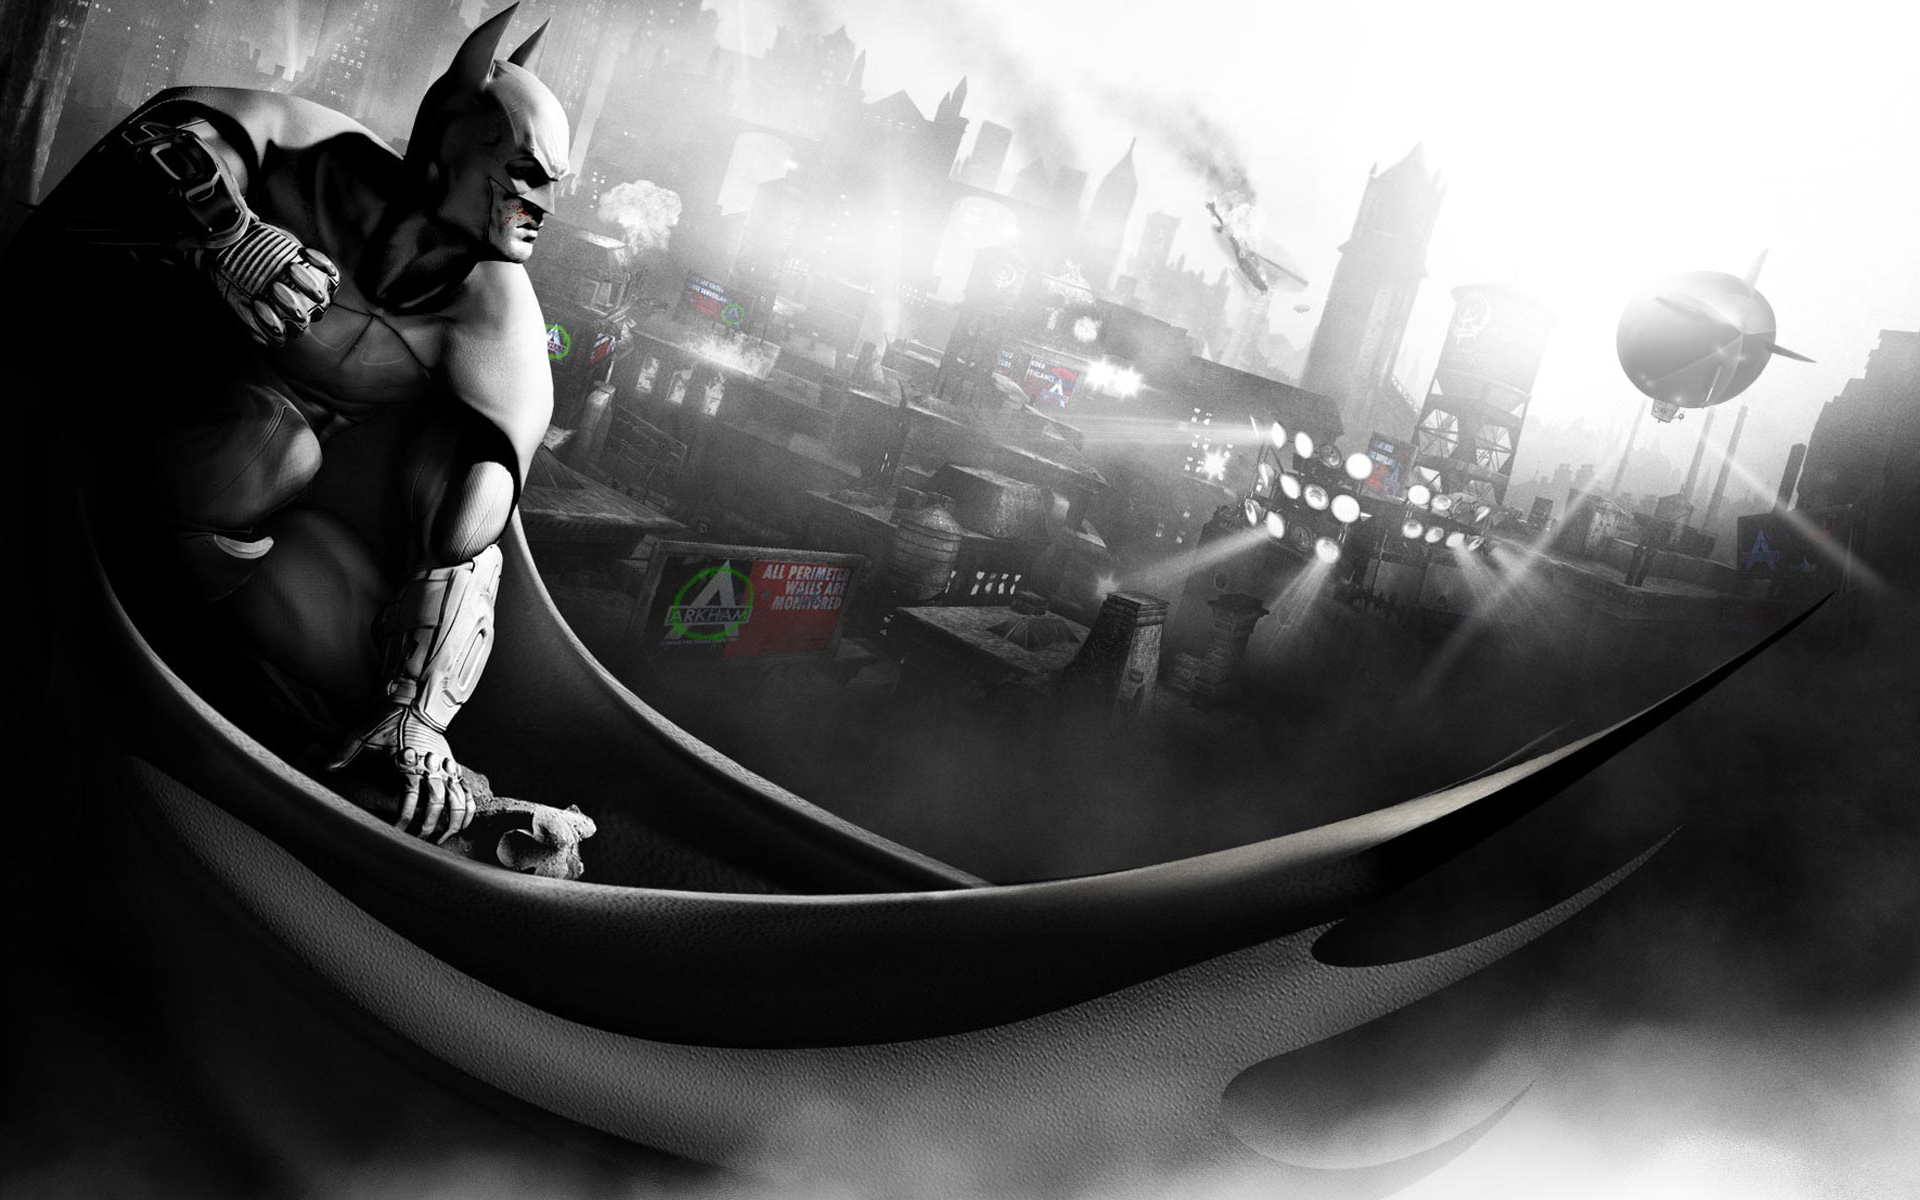 2560x800px, free download, HD wallpaper: batman batman arkham city